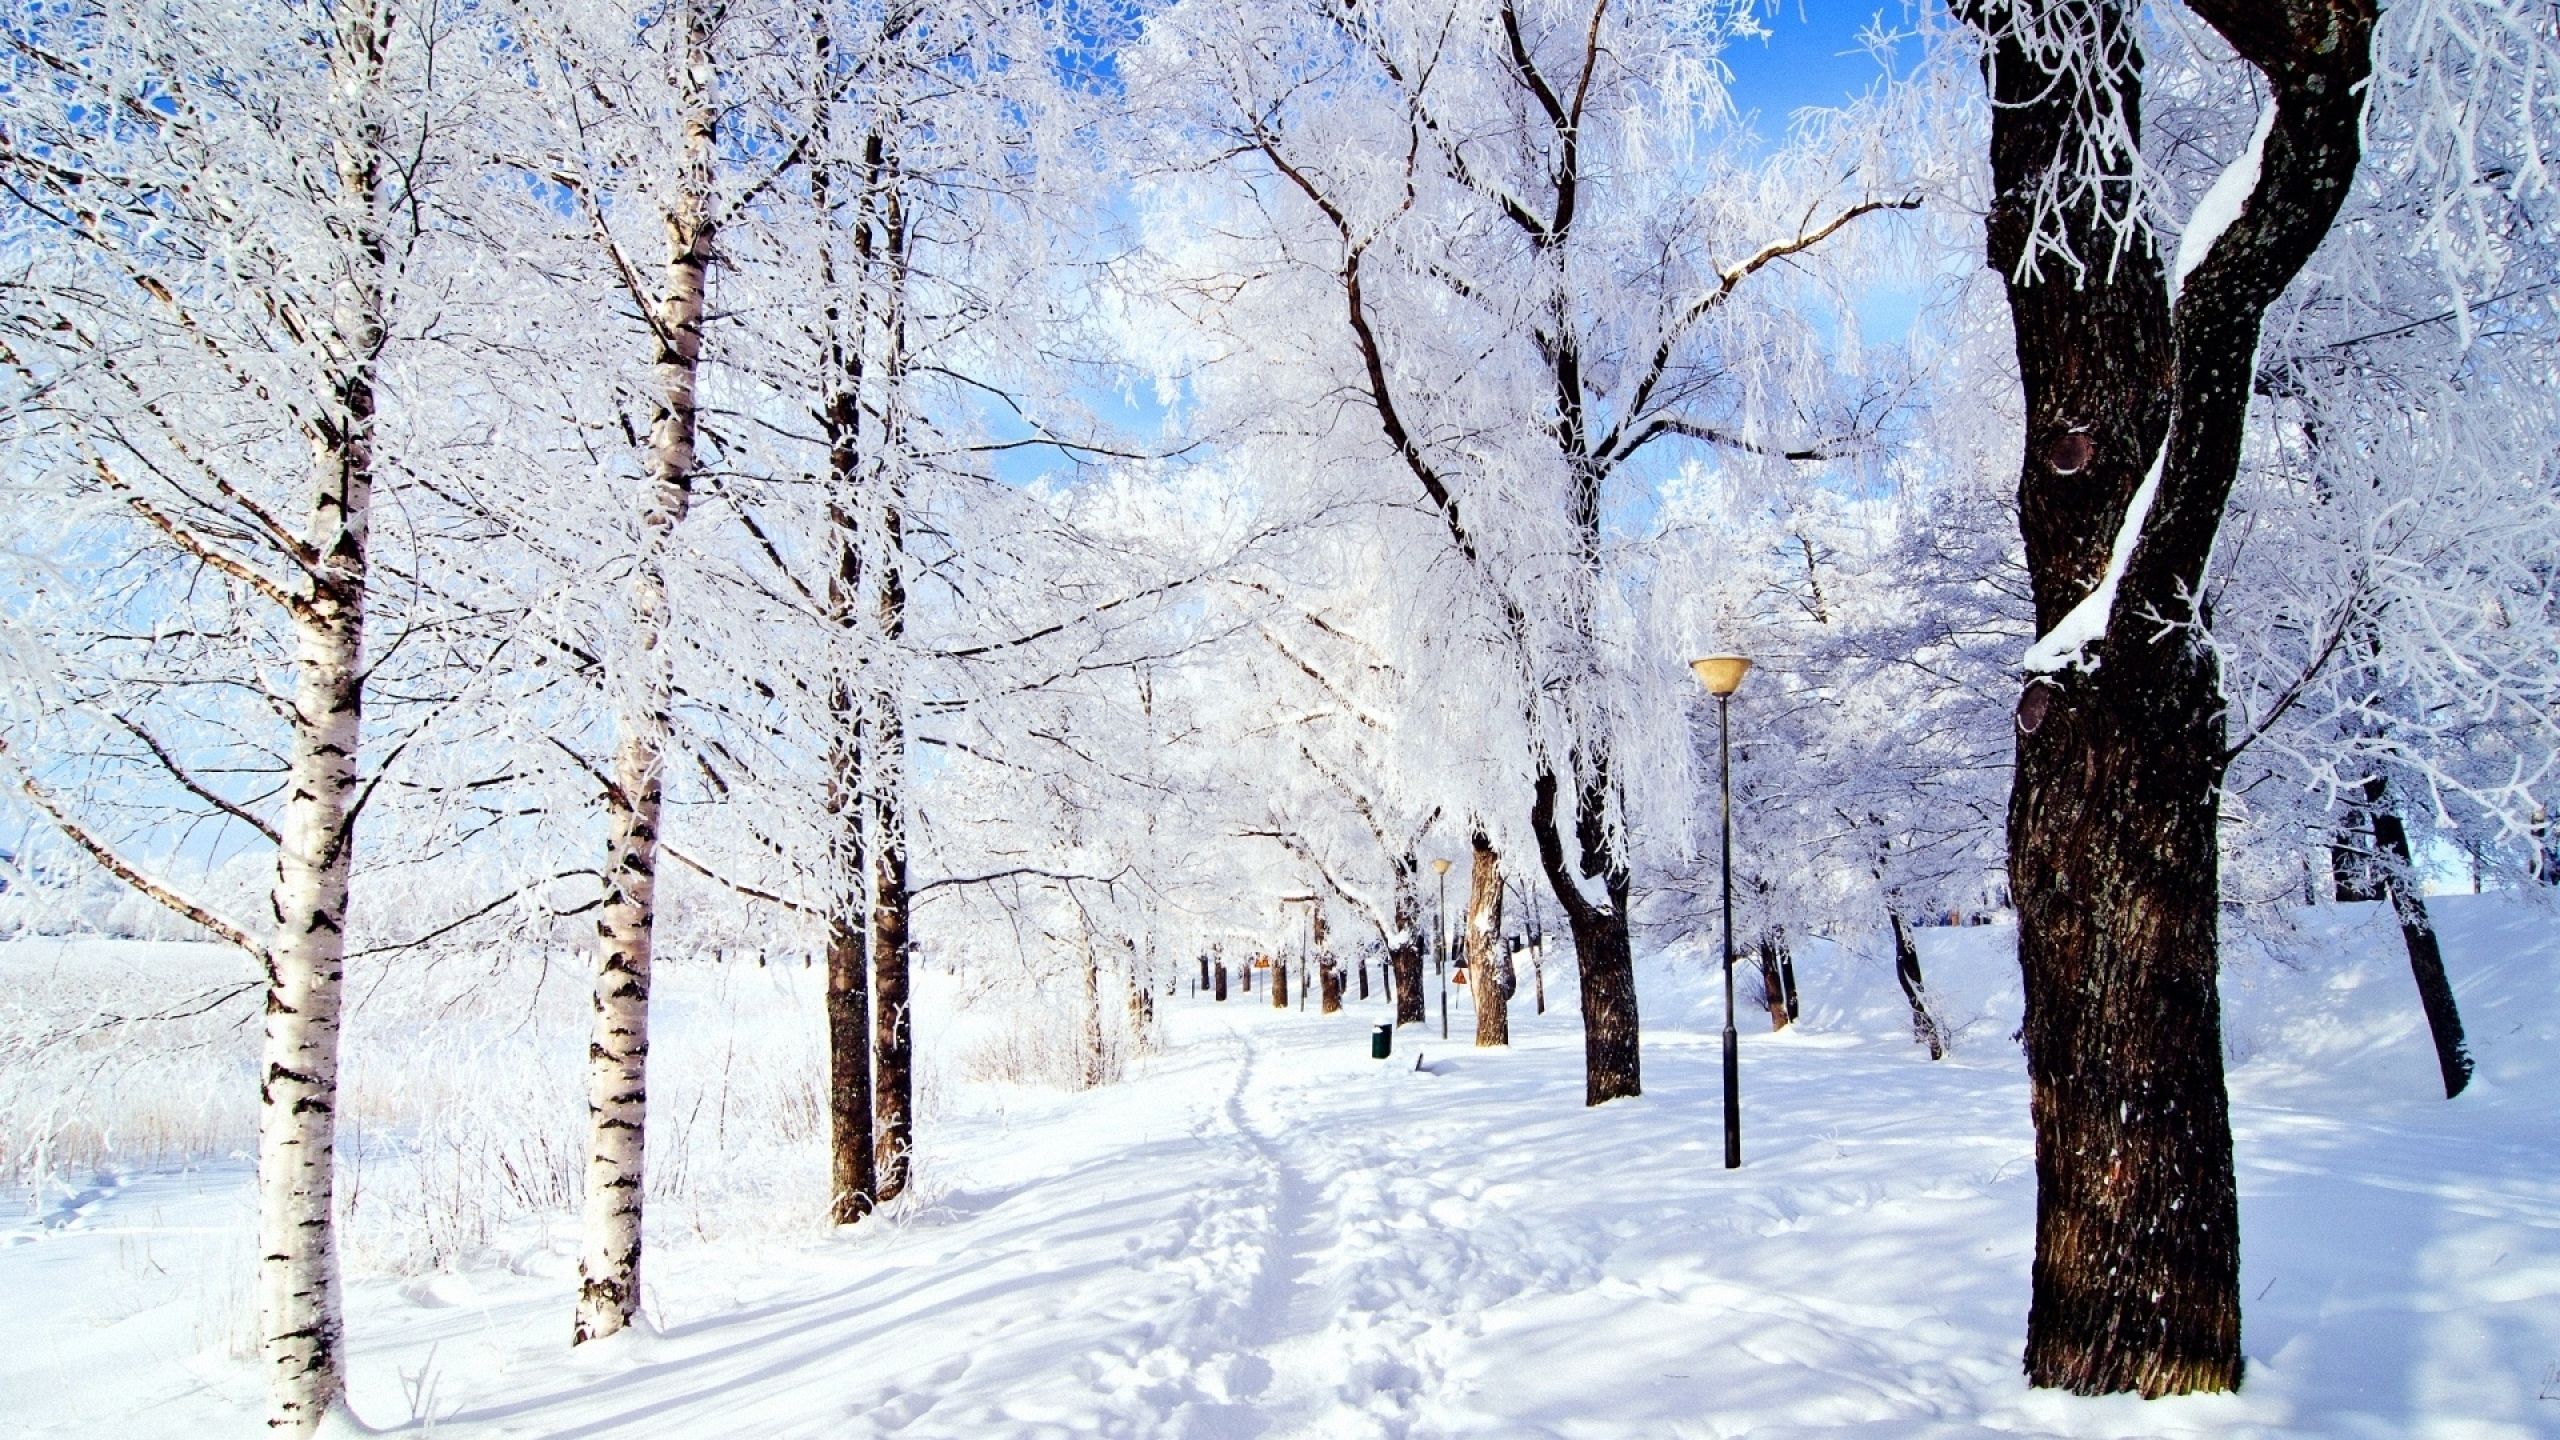 Winter Christmas Mac Wallpaper Download. Free Mac Wallpaper Download. Winter wonderland wallpaper, Winter wallpaper, Winter trees